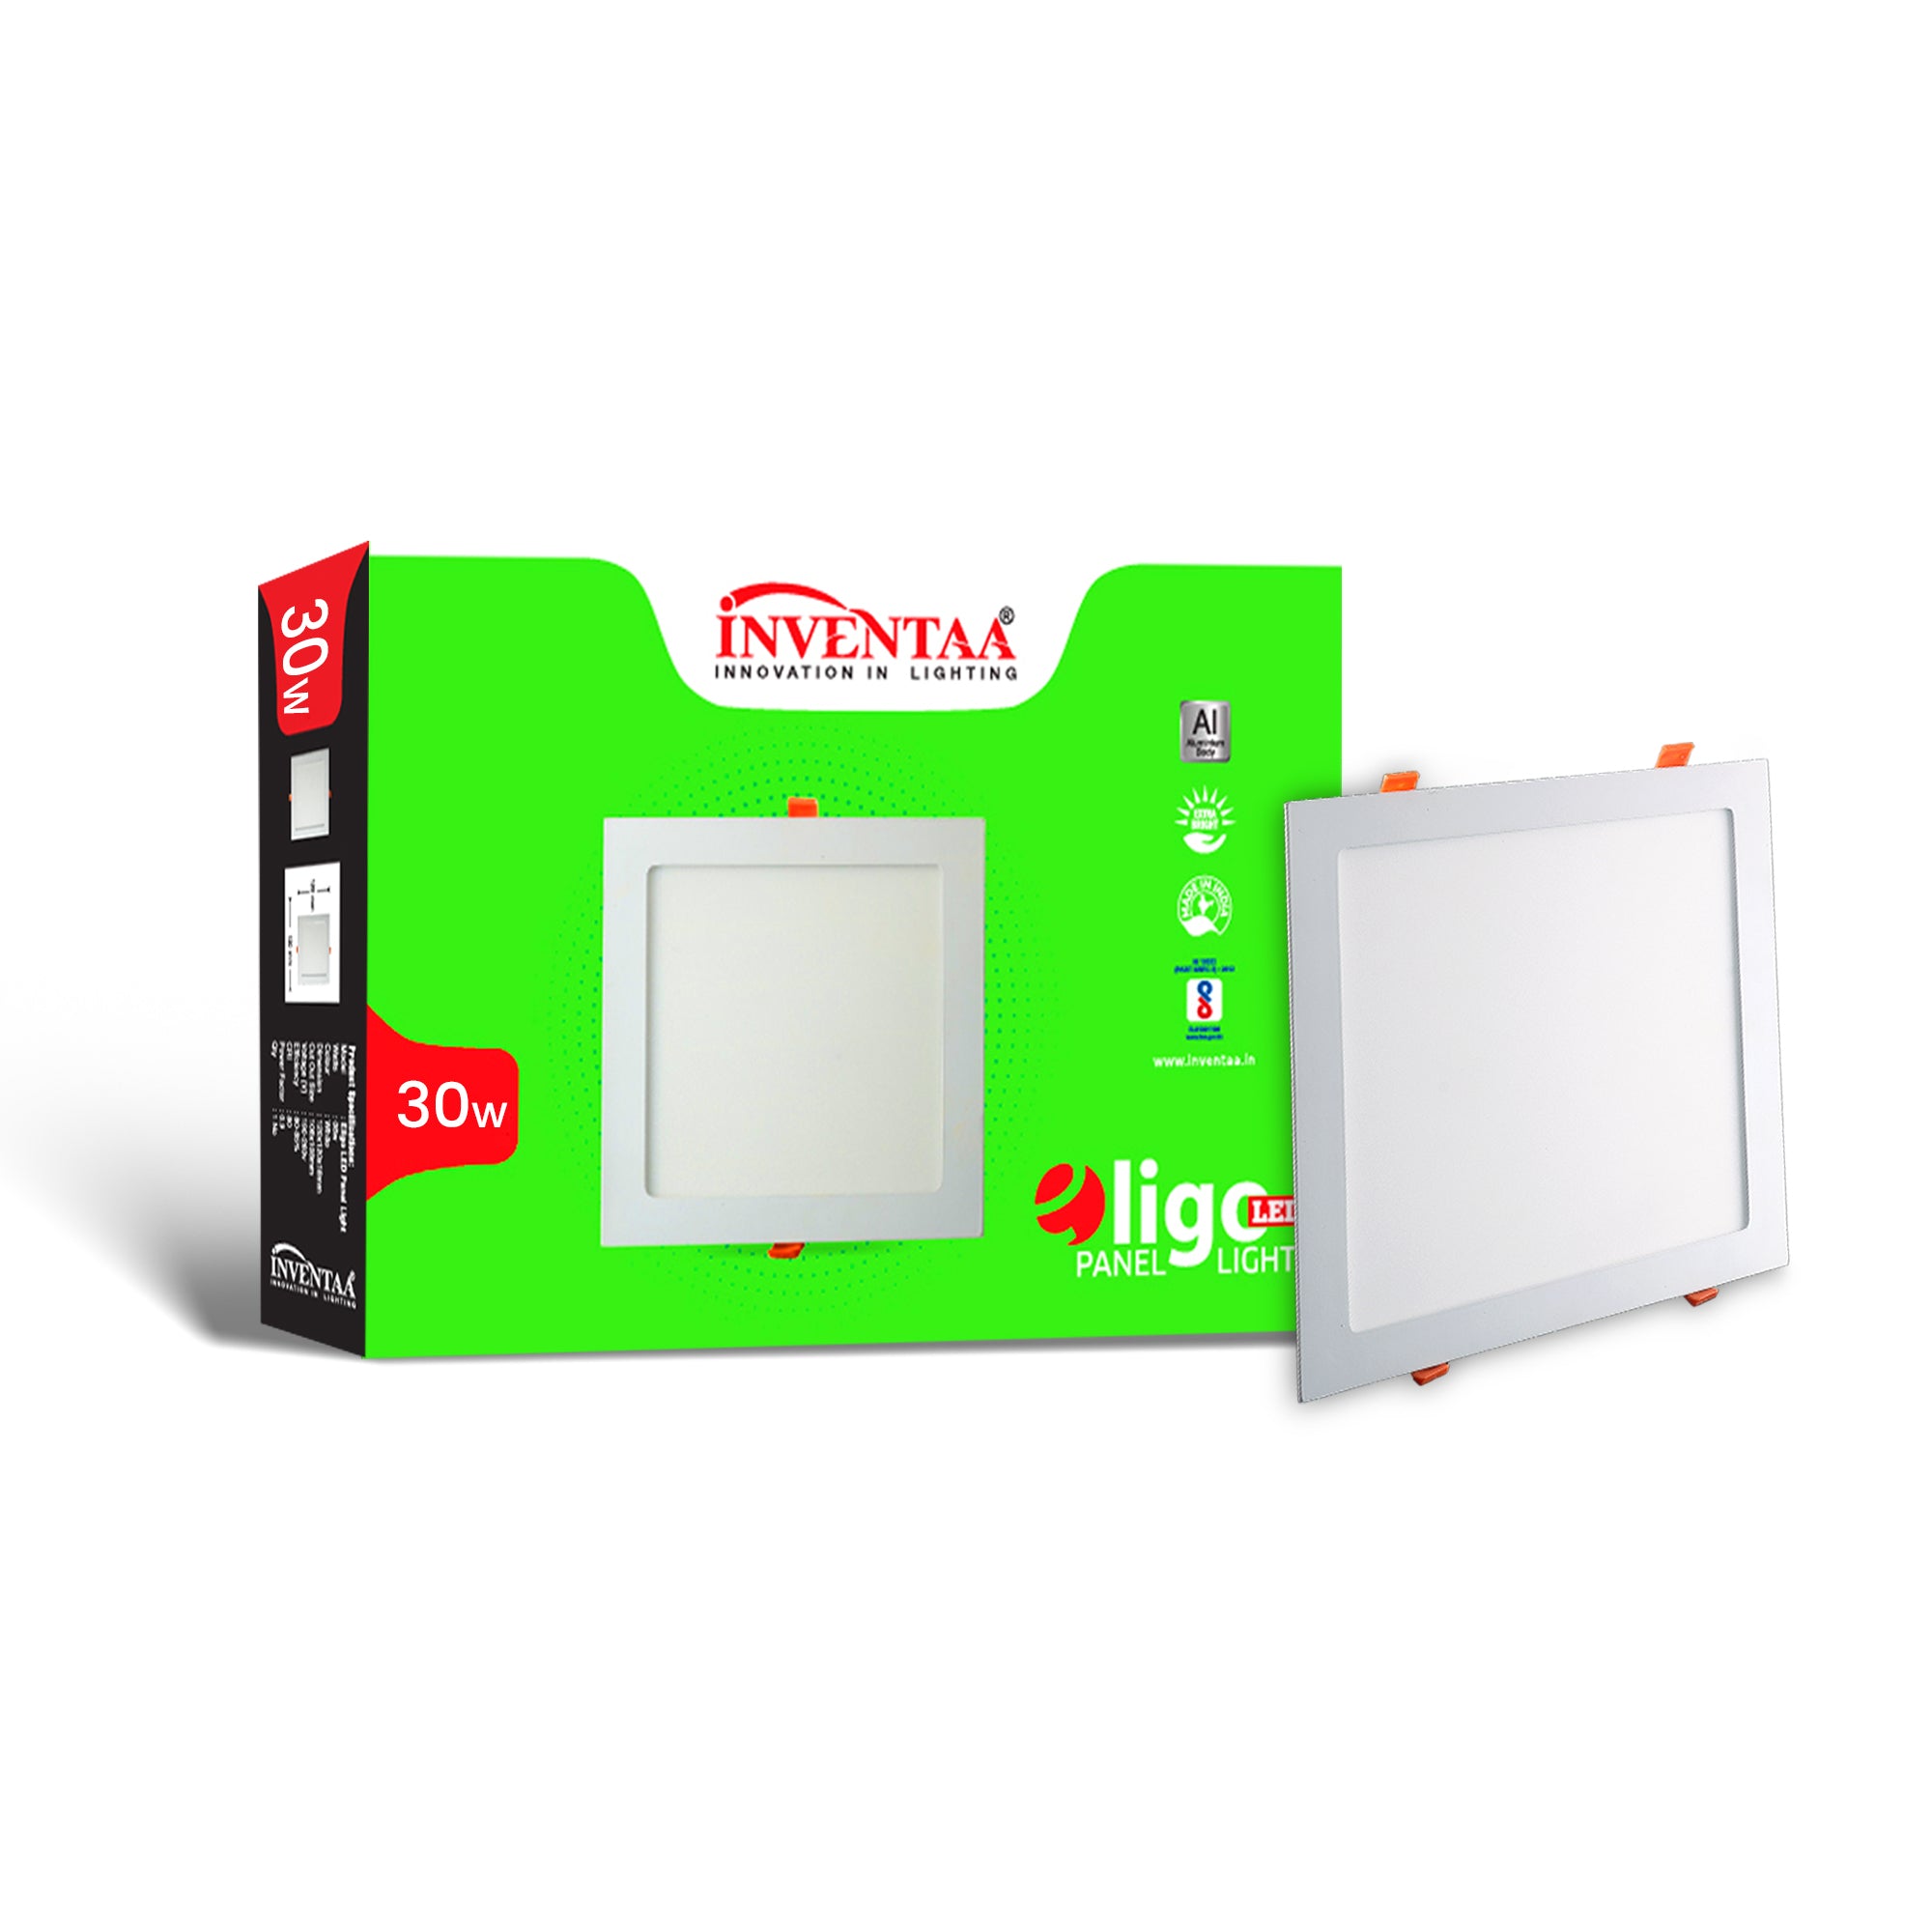 Eligo square 30w led panel light with its box enclosure #watts_30w